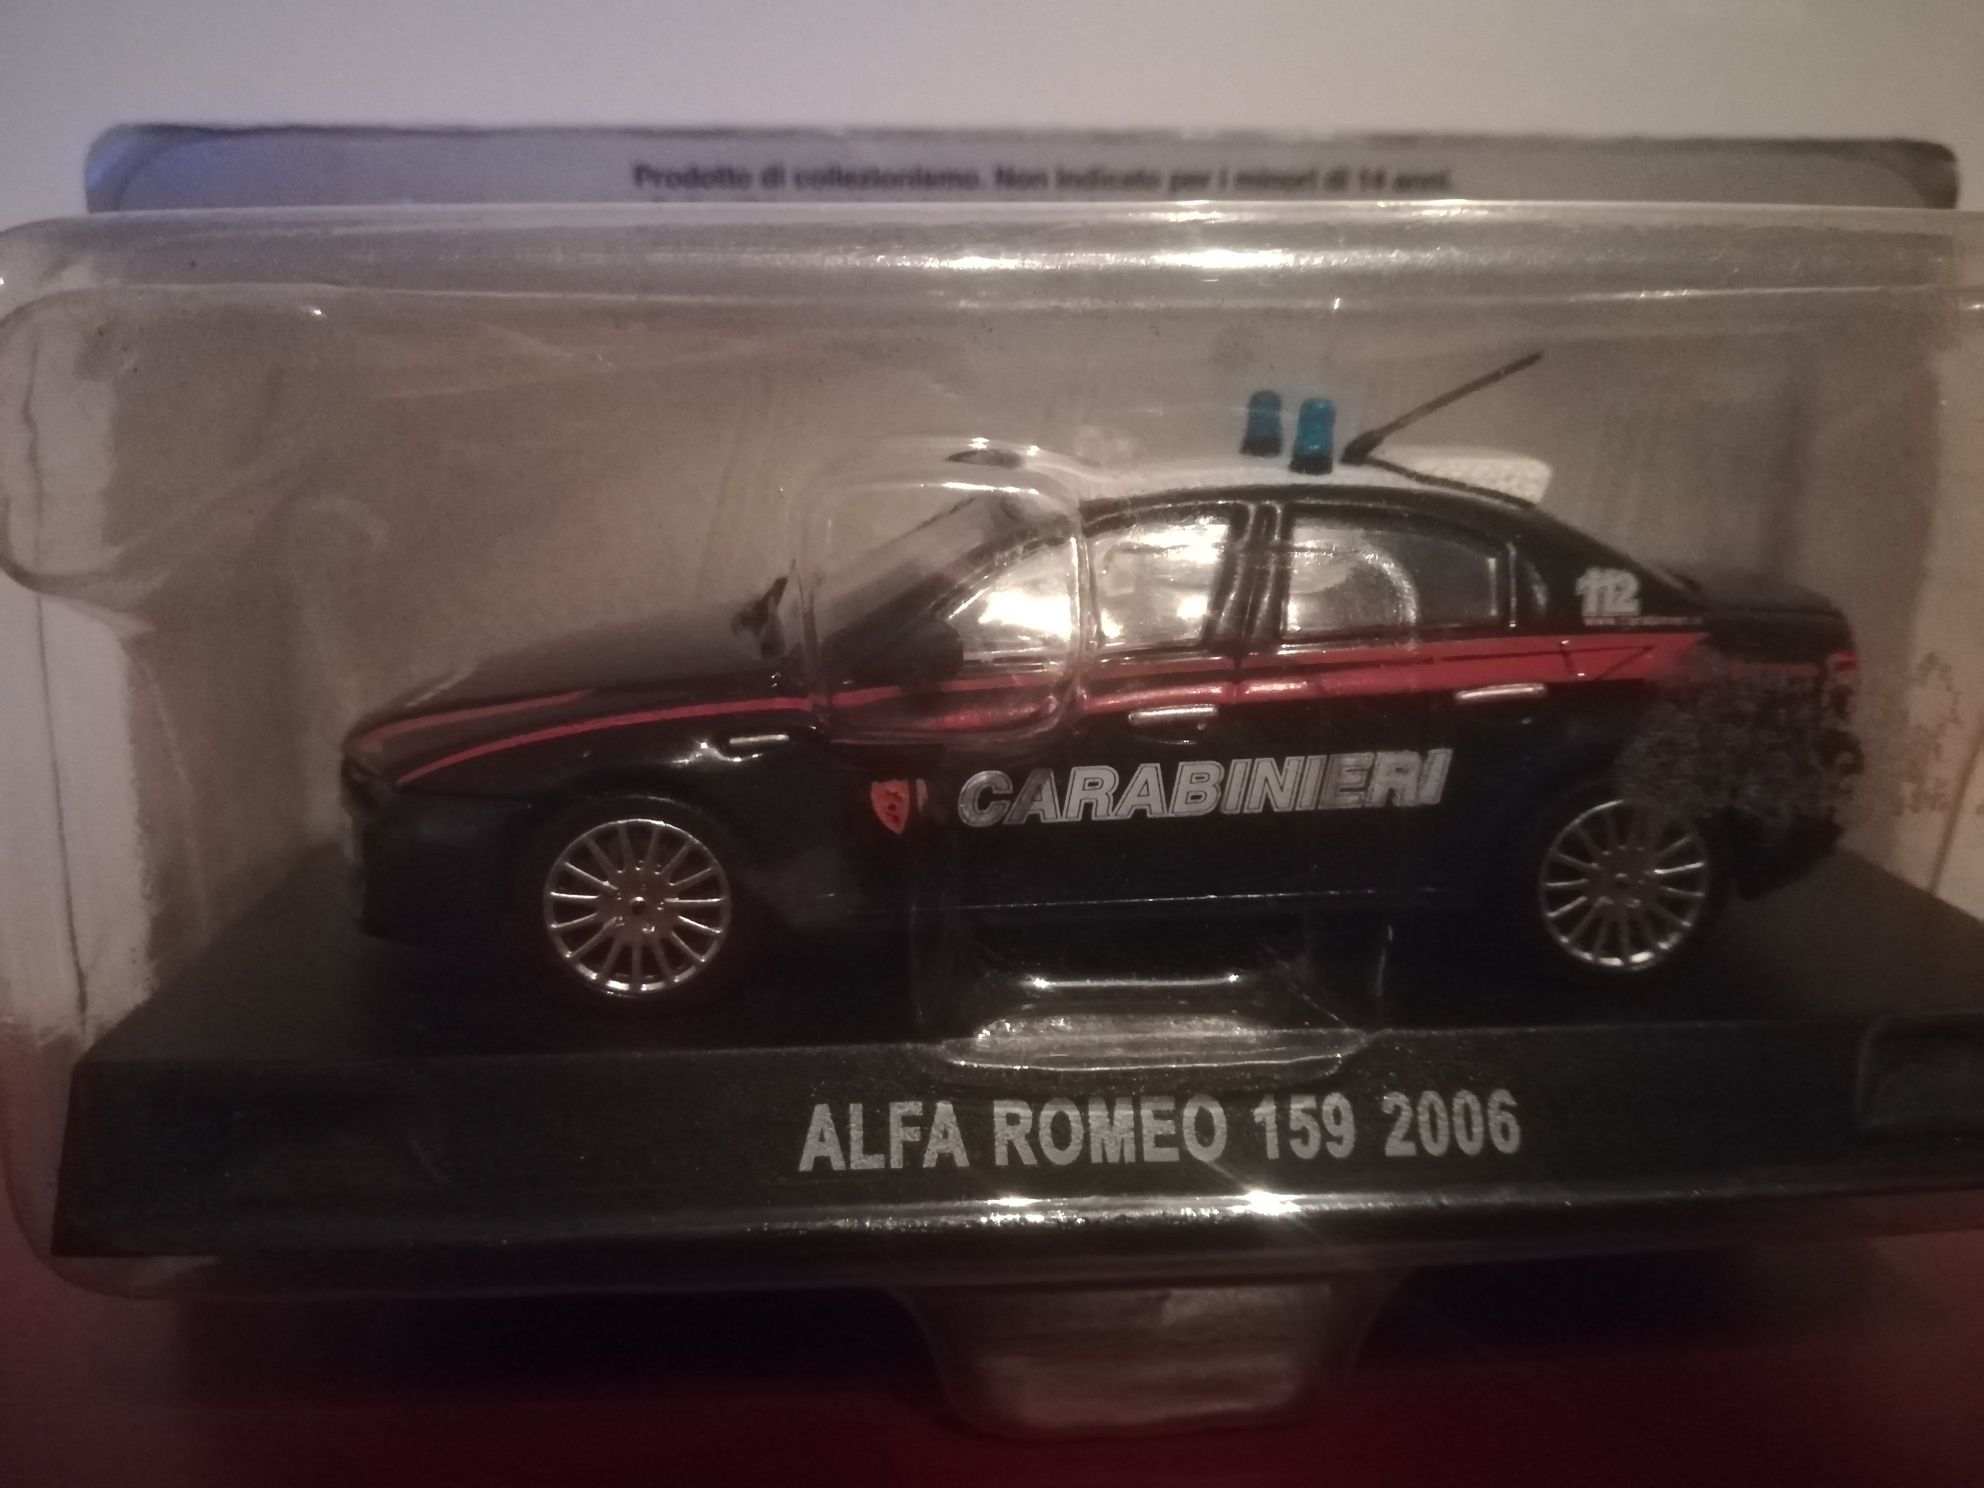 Vand macheta Alfa Romeo 159 carabinieri